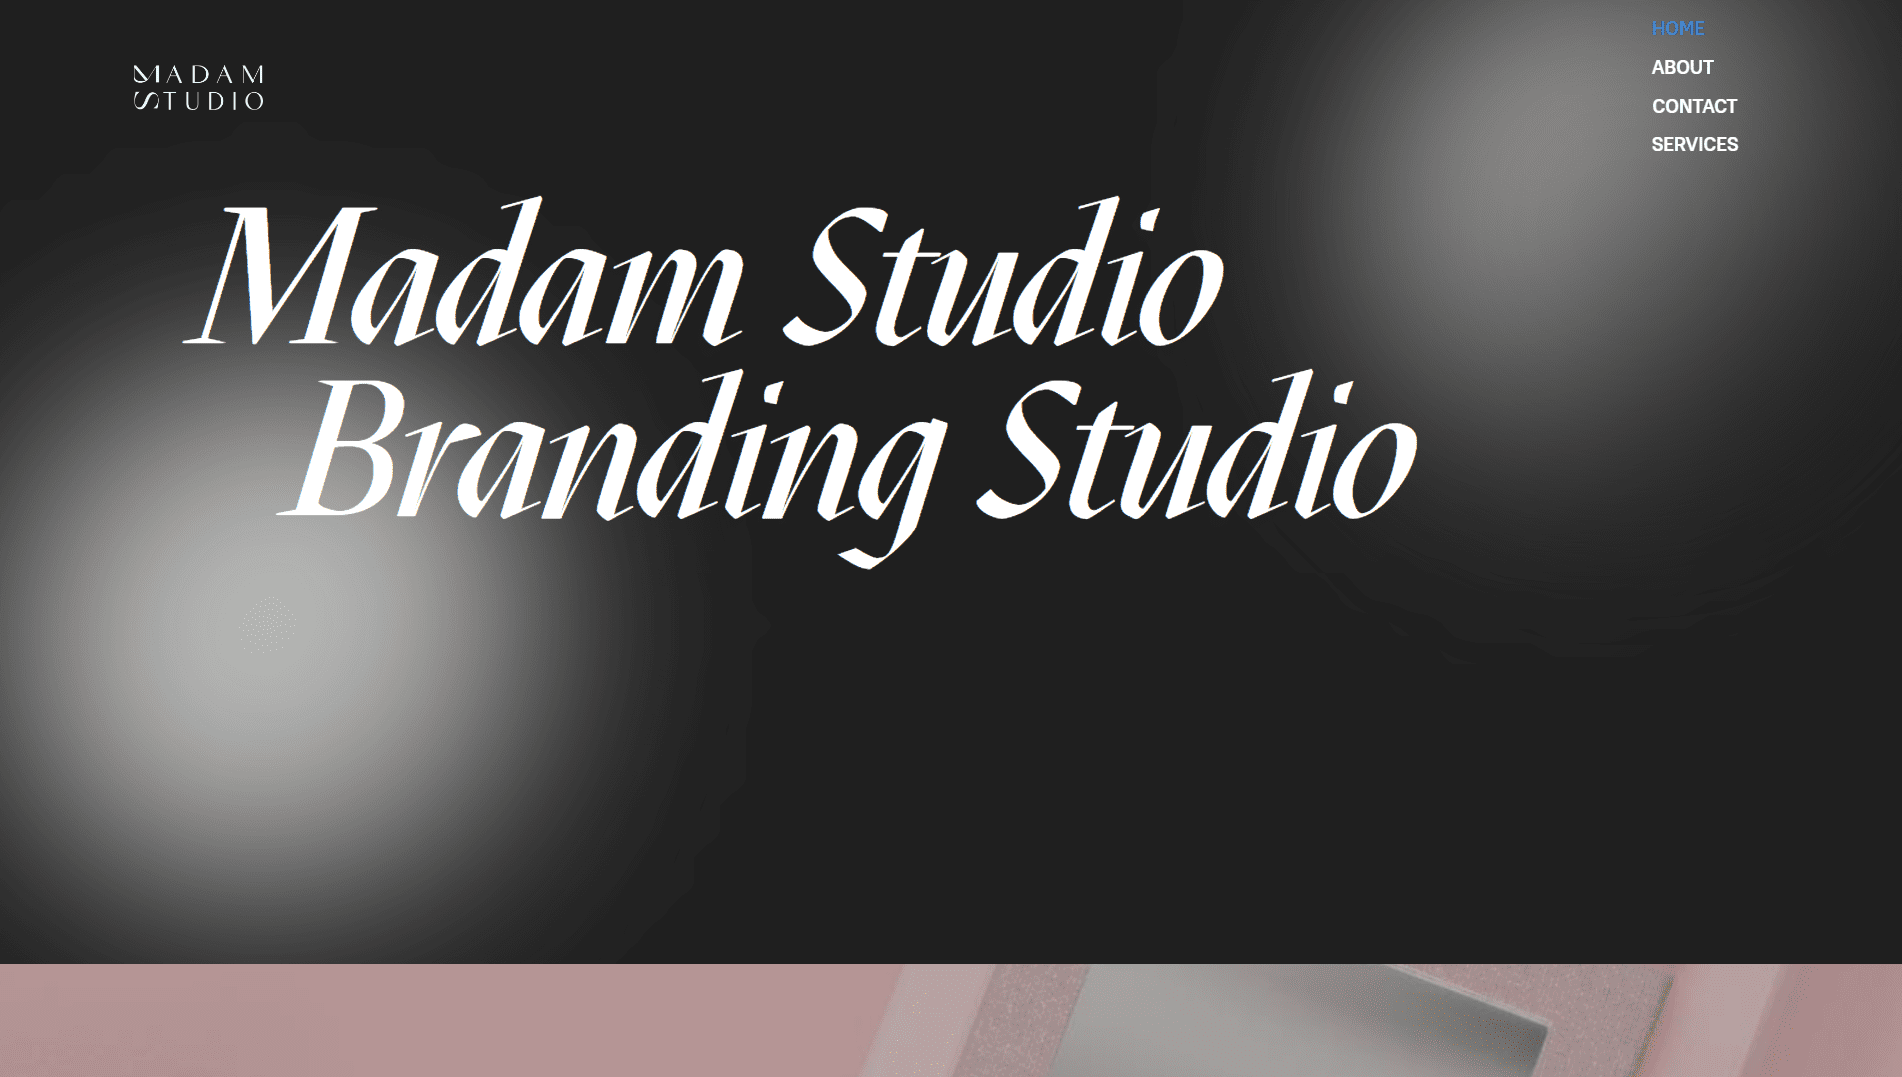 Madam Studio